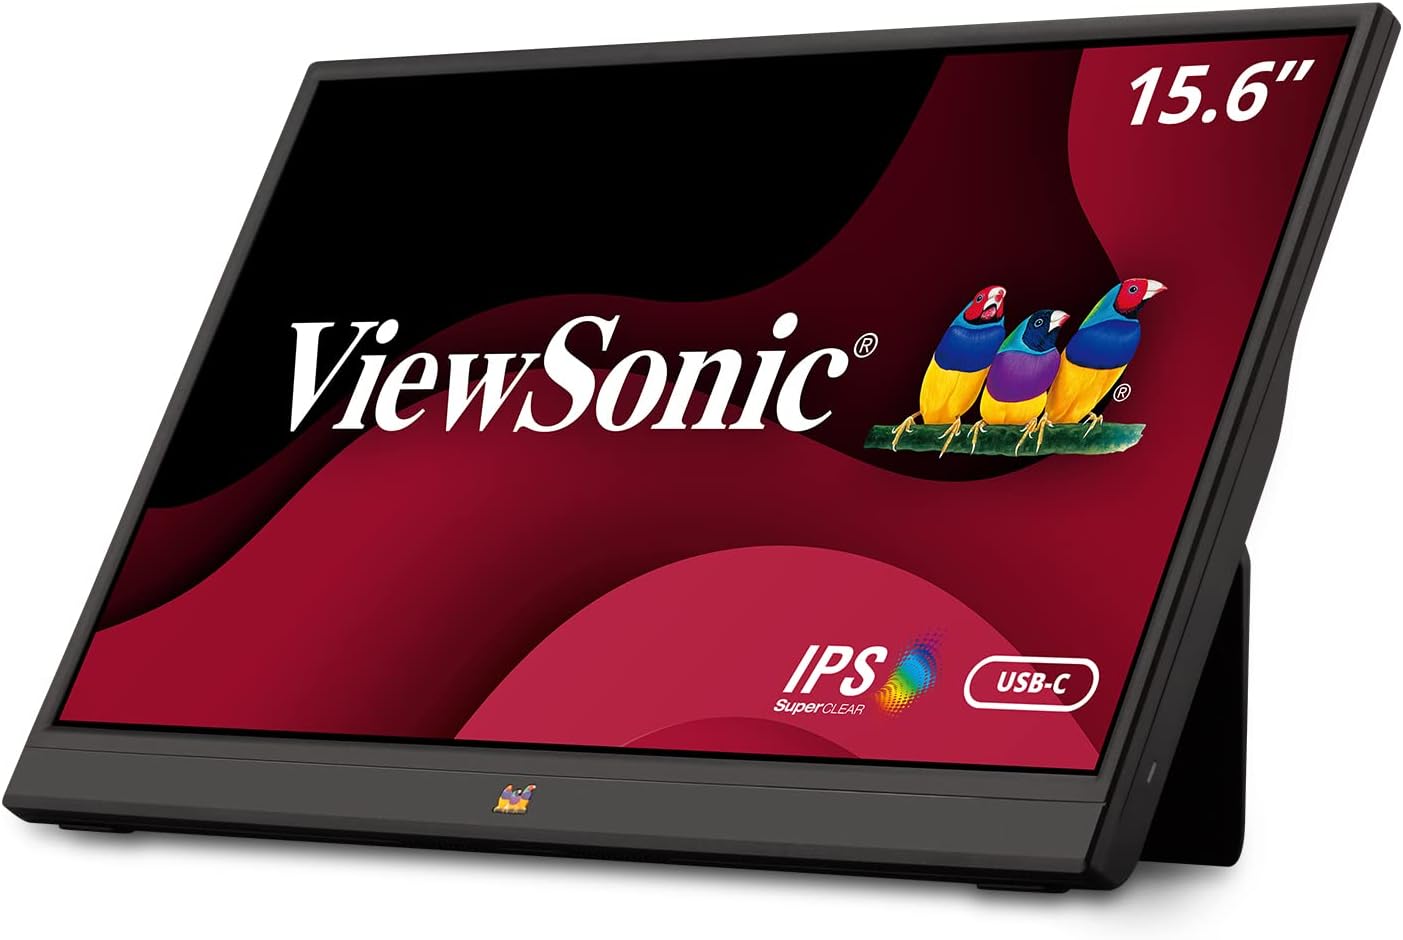 ViewSonic 15.6" VA1655 1080p Portable IPS Monitor w/ Mobile Ergonomics $109.99 @Amazon